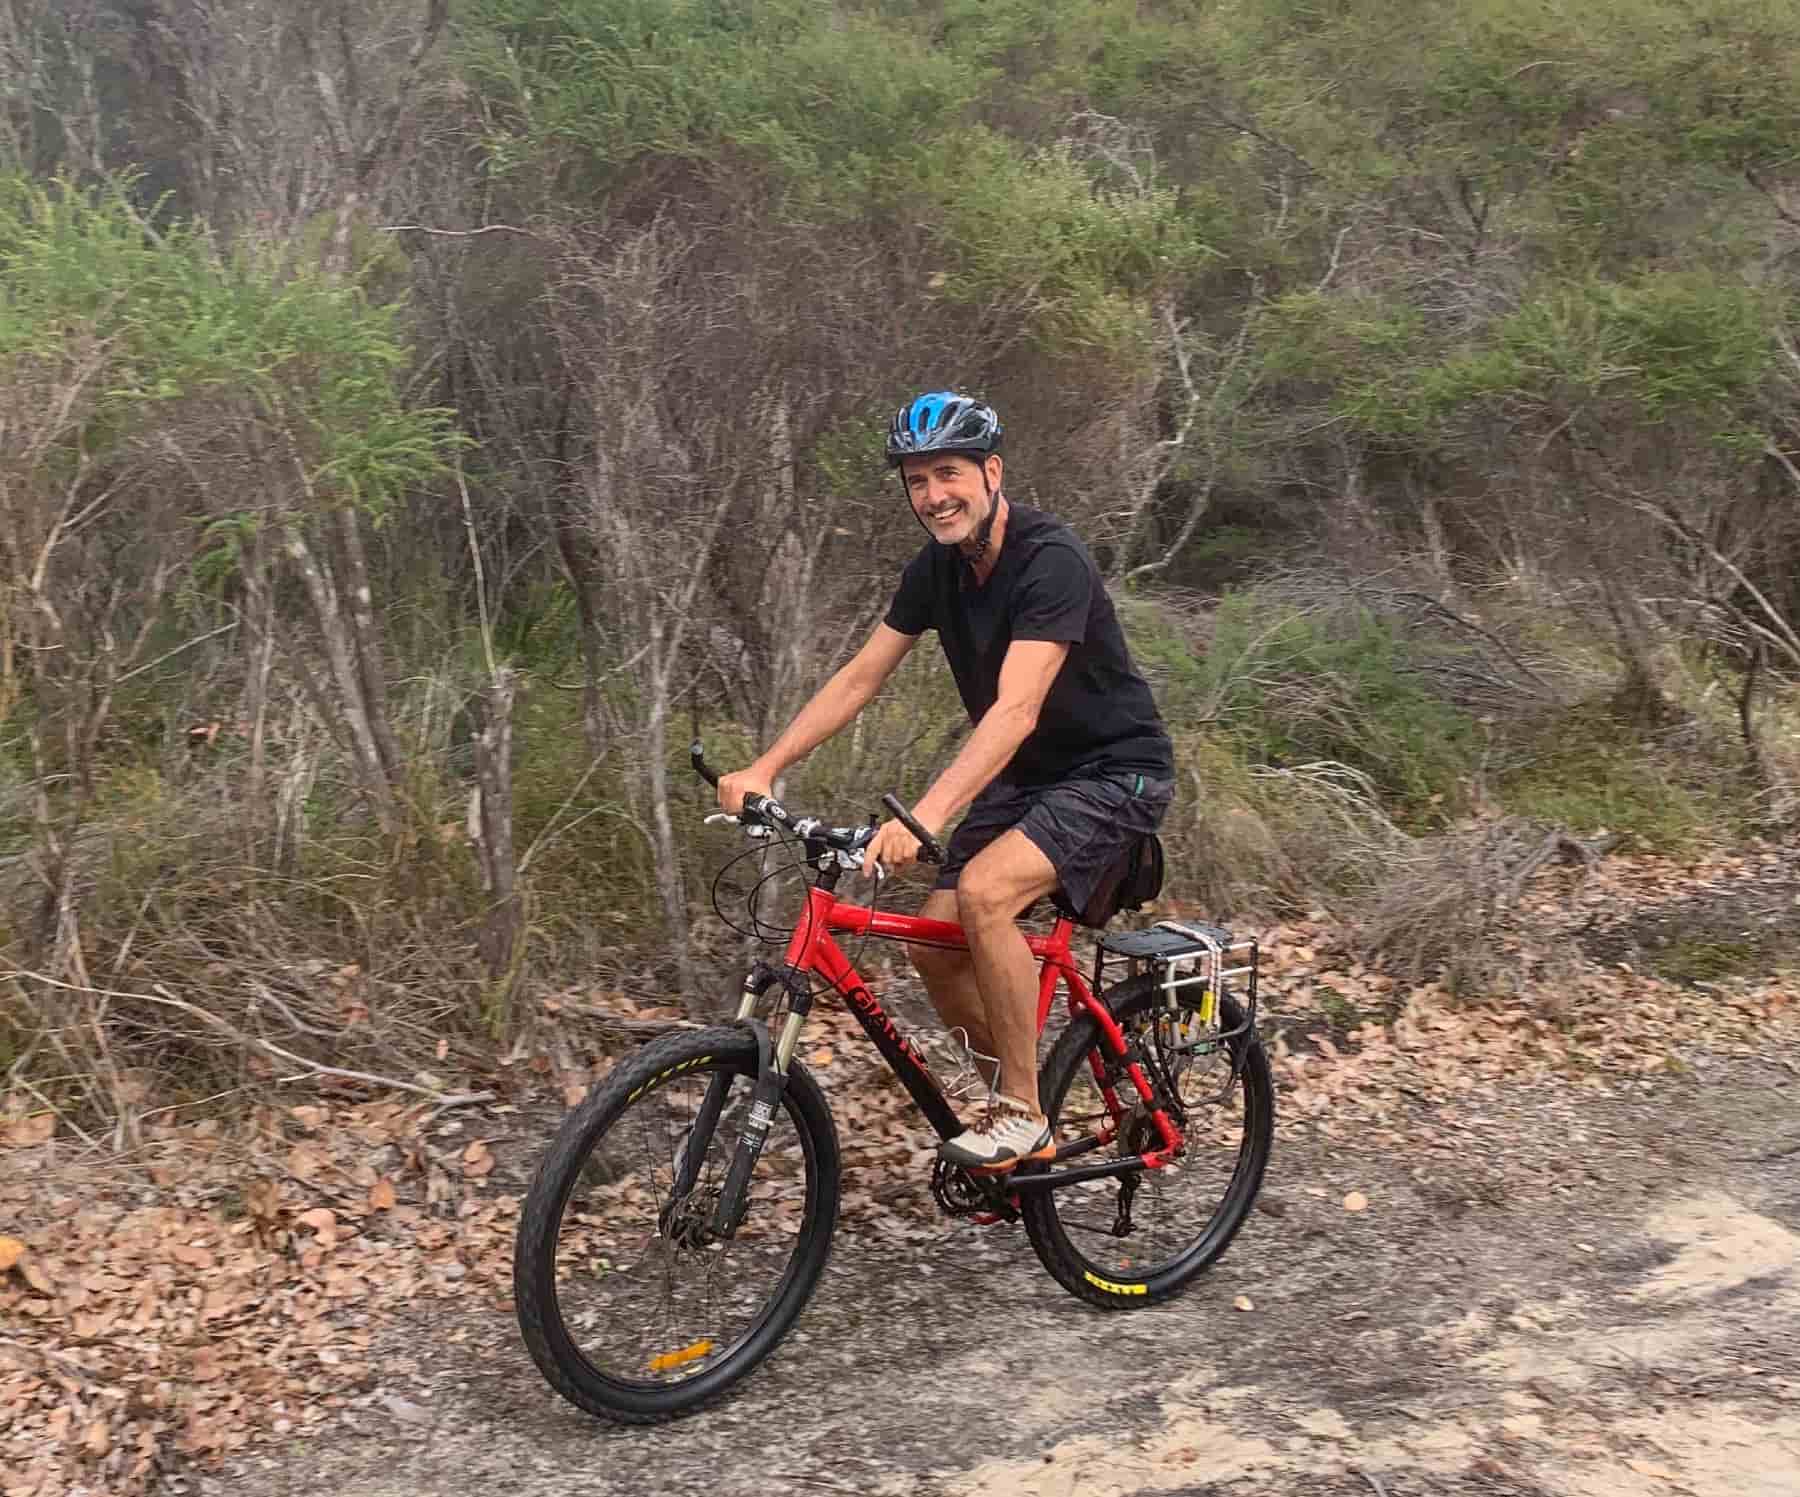 Gadi cycling on a bike in the bush